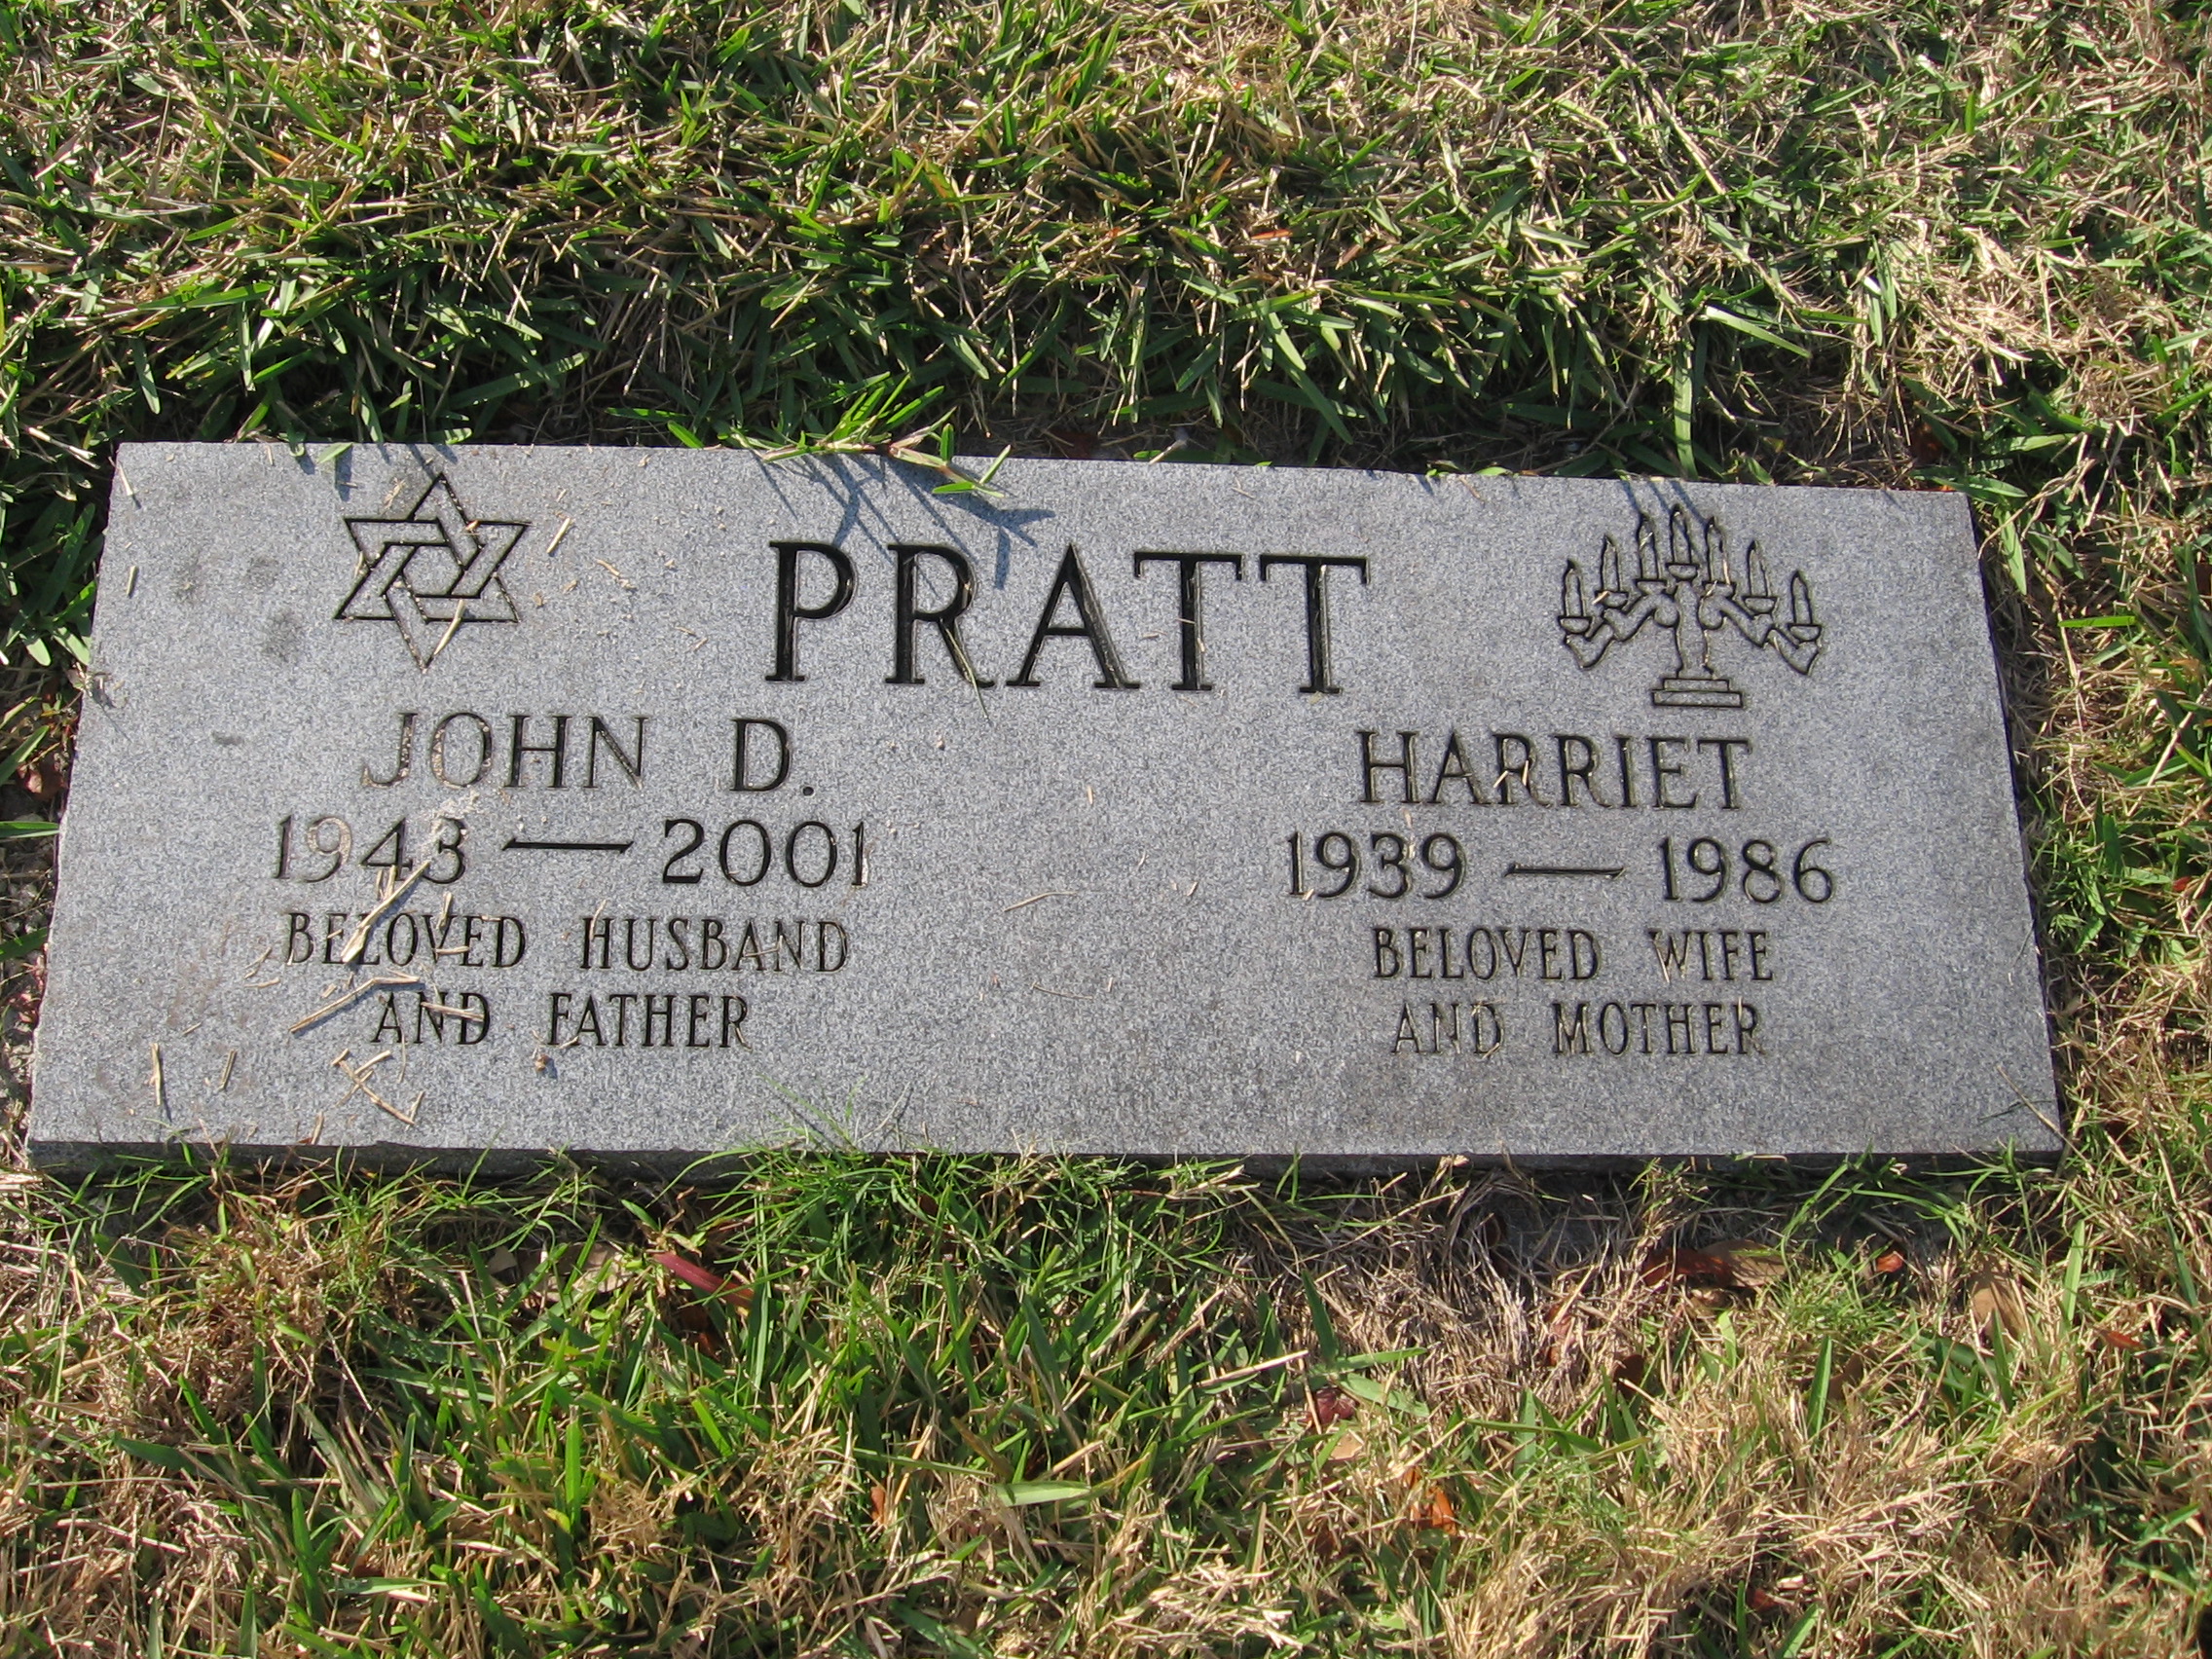 John D Pratt